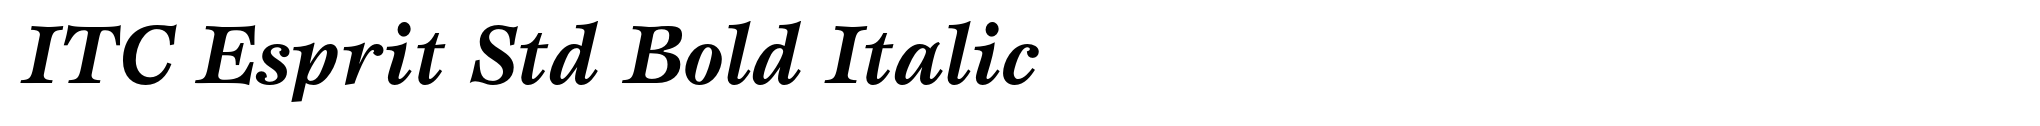 ITC Esprit Std Bold Italic image